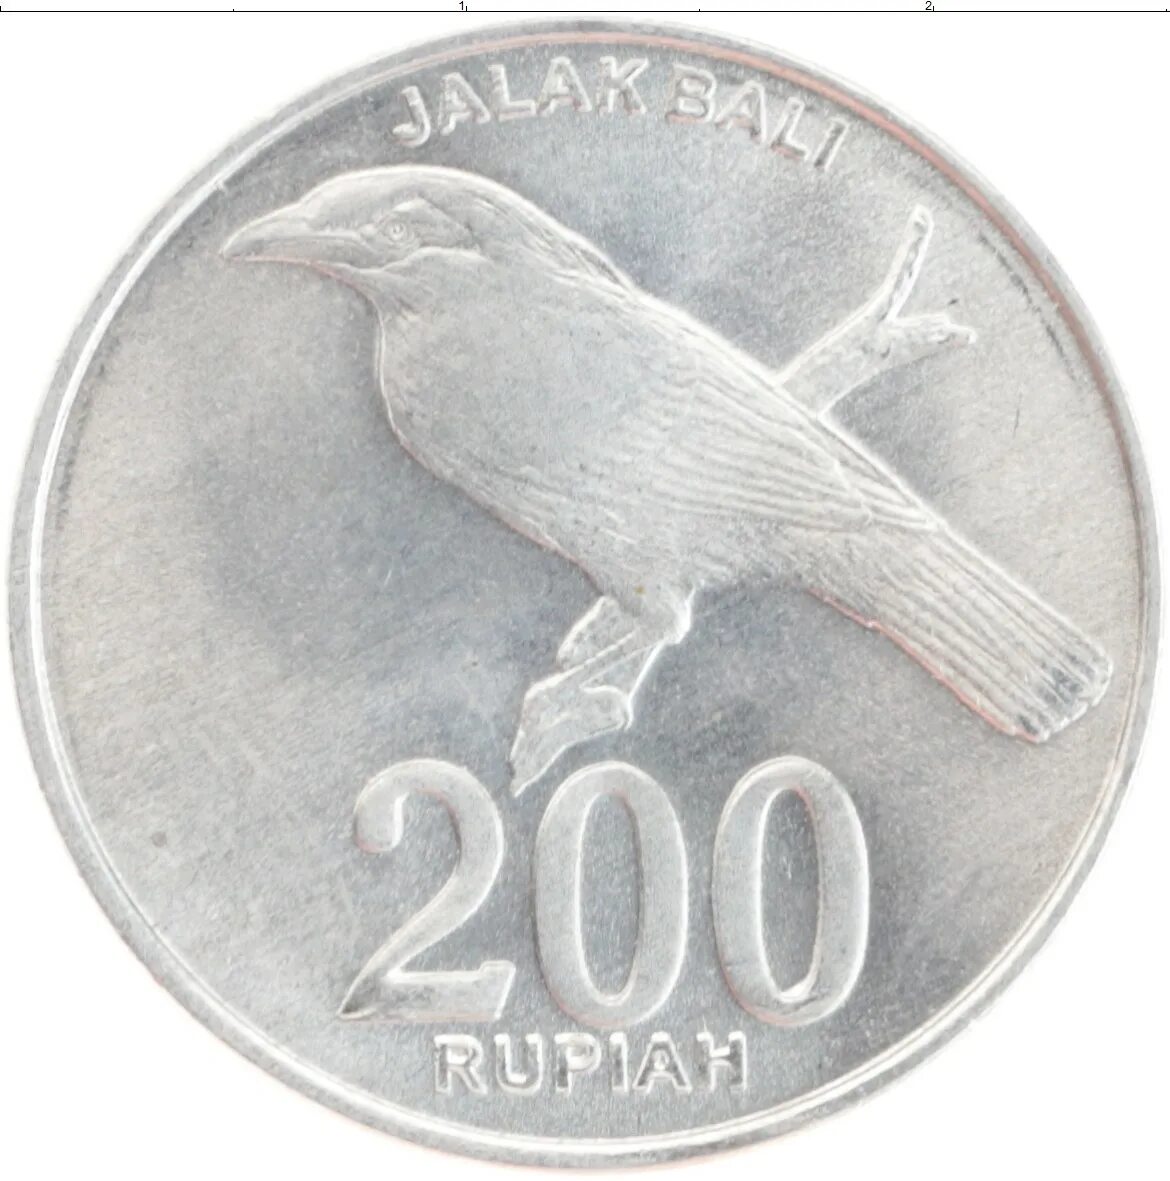 200 Рупий монета. Монеты 2003. 1 IDR В руб. 100 000 Индонезийских рупий в рублях.